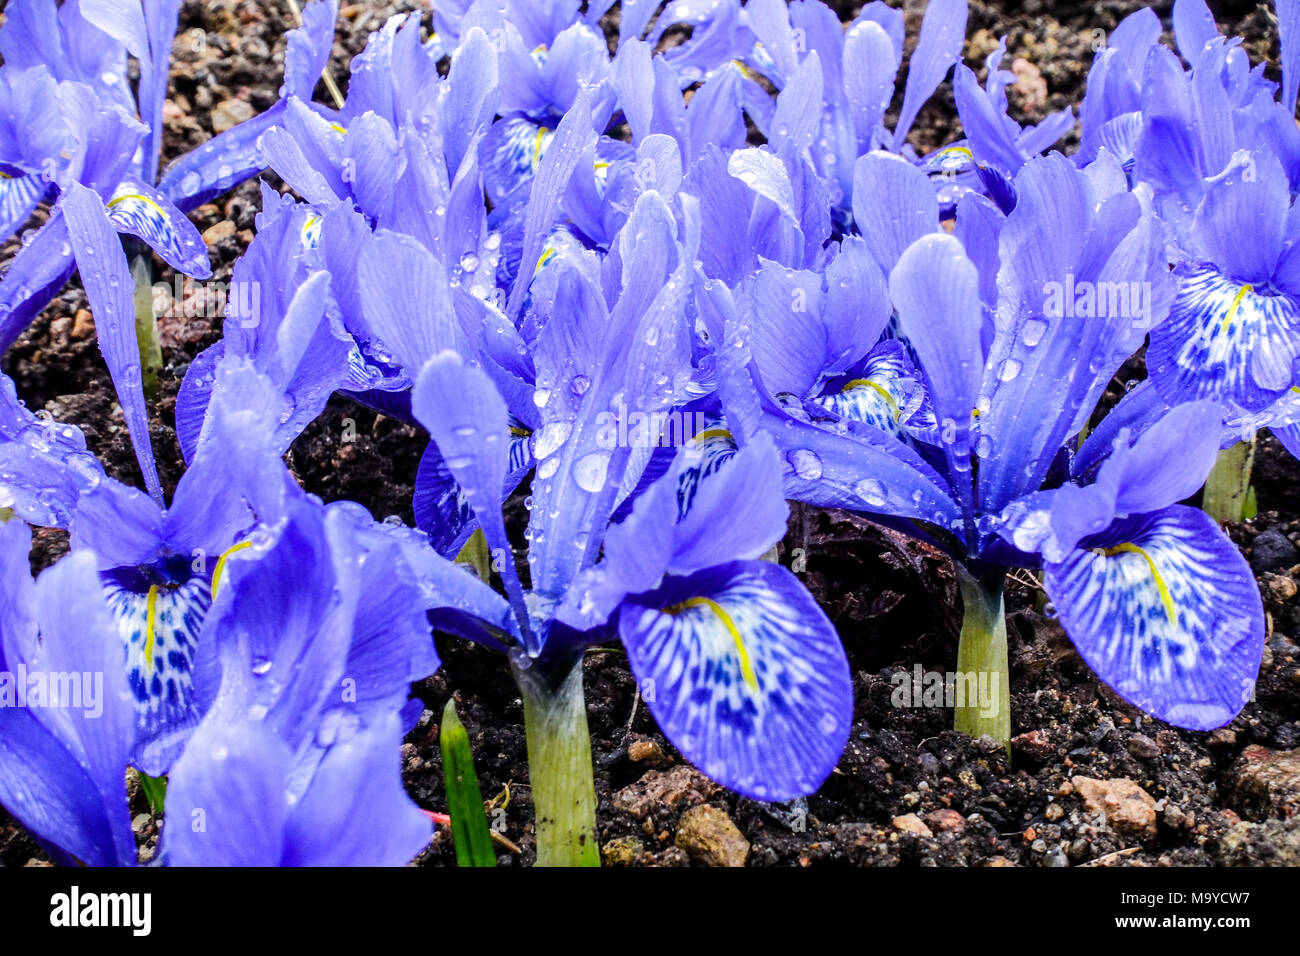 https://c8.alamy.com/comp/M9YCW7/iris-histrioides-lady-beatrix-stanley-blue-iris-dwarf-irises-M9YCW7.jpg